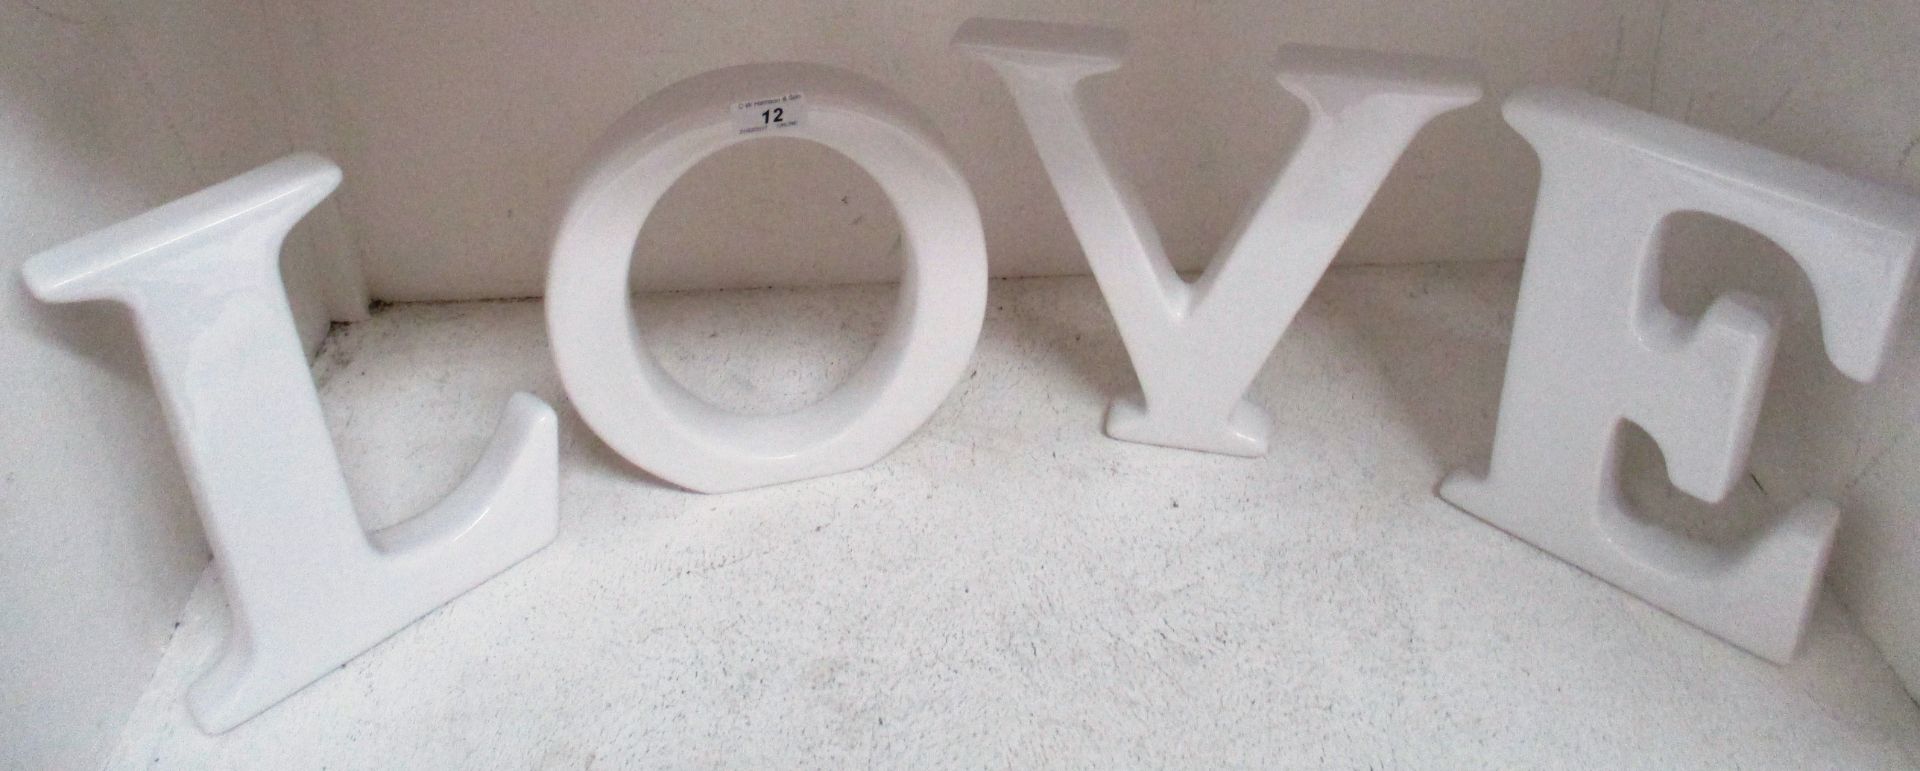 4 x gloss white ceramic letters "LOVE"